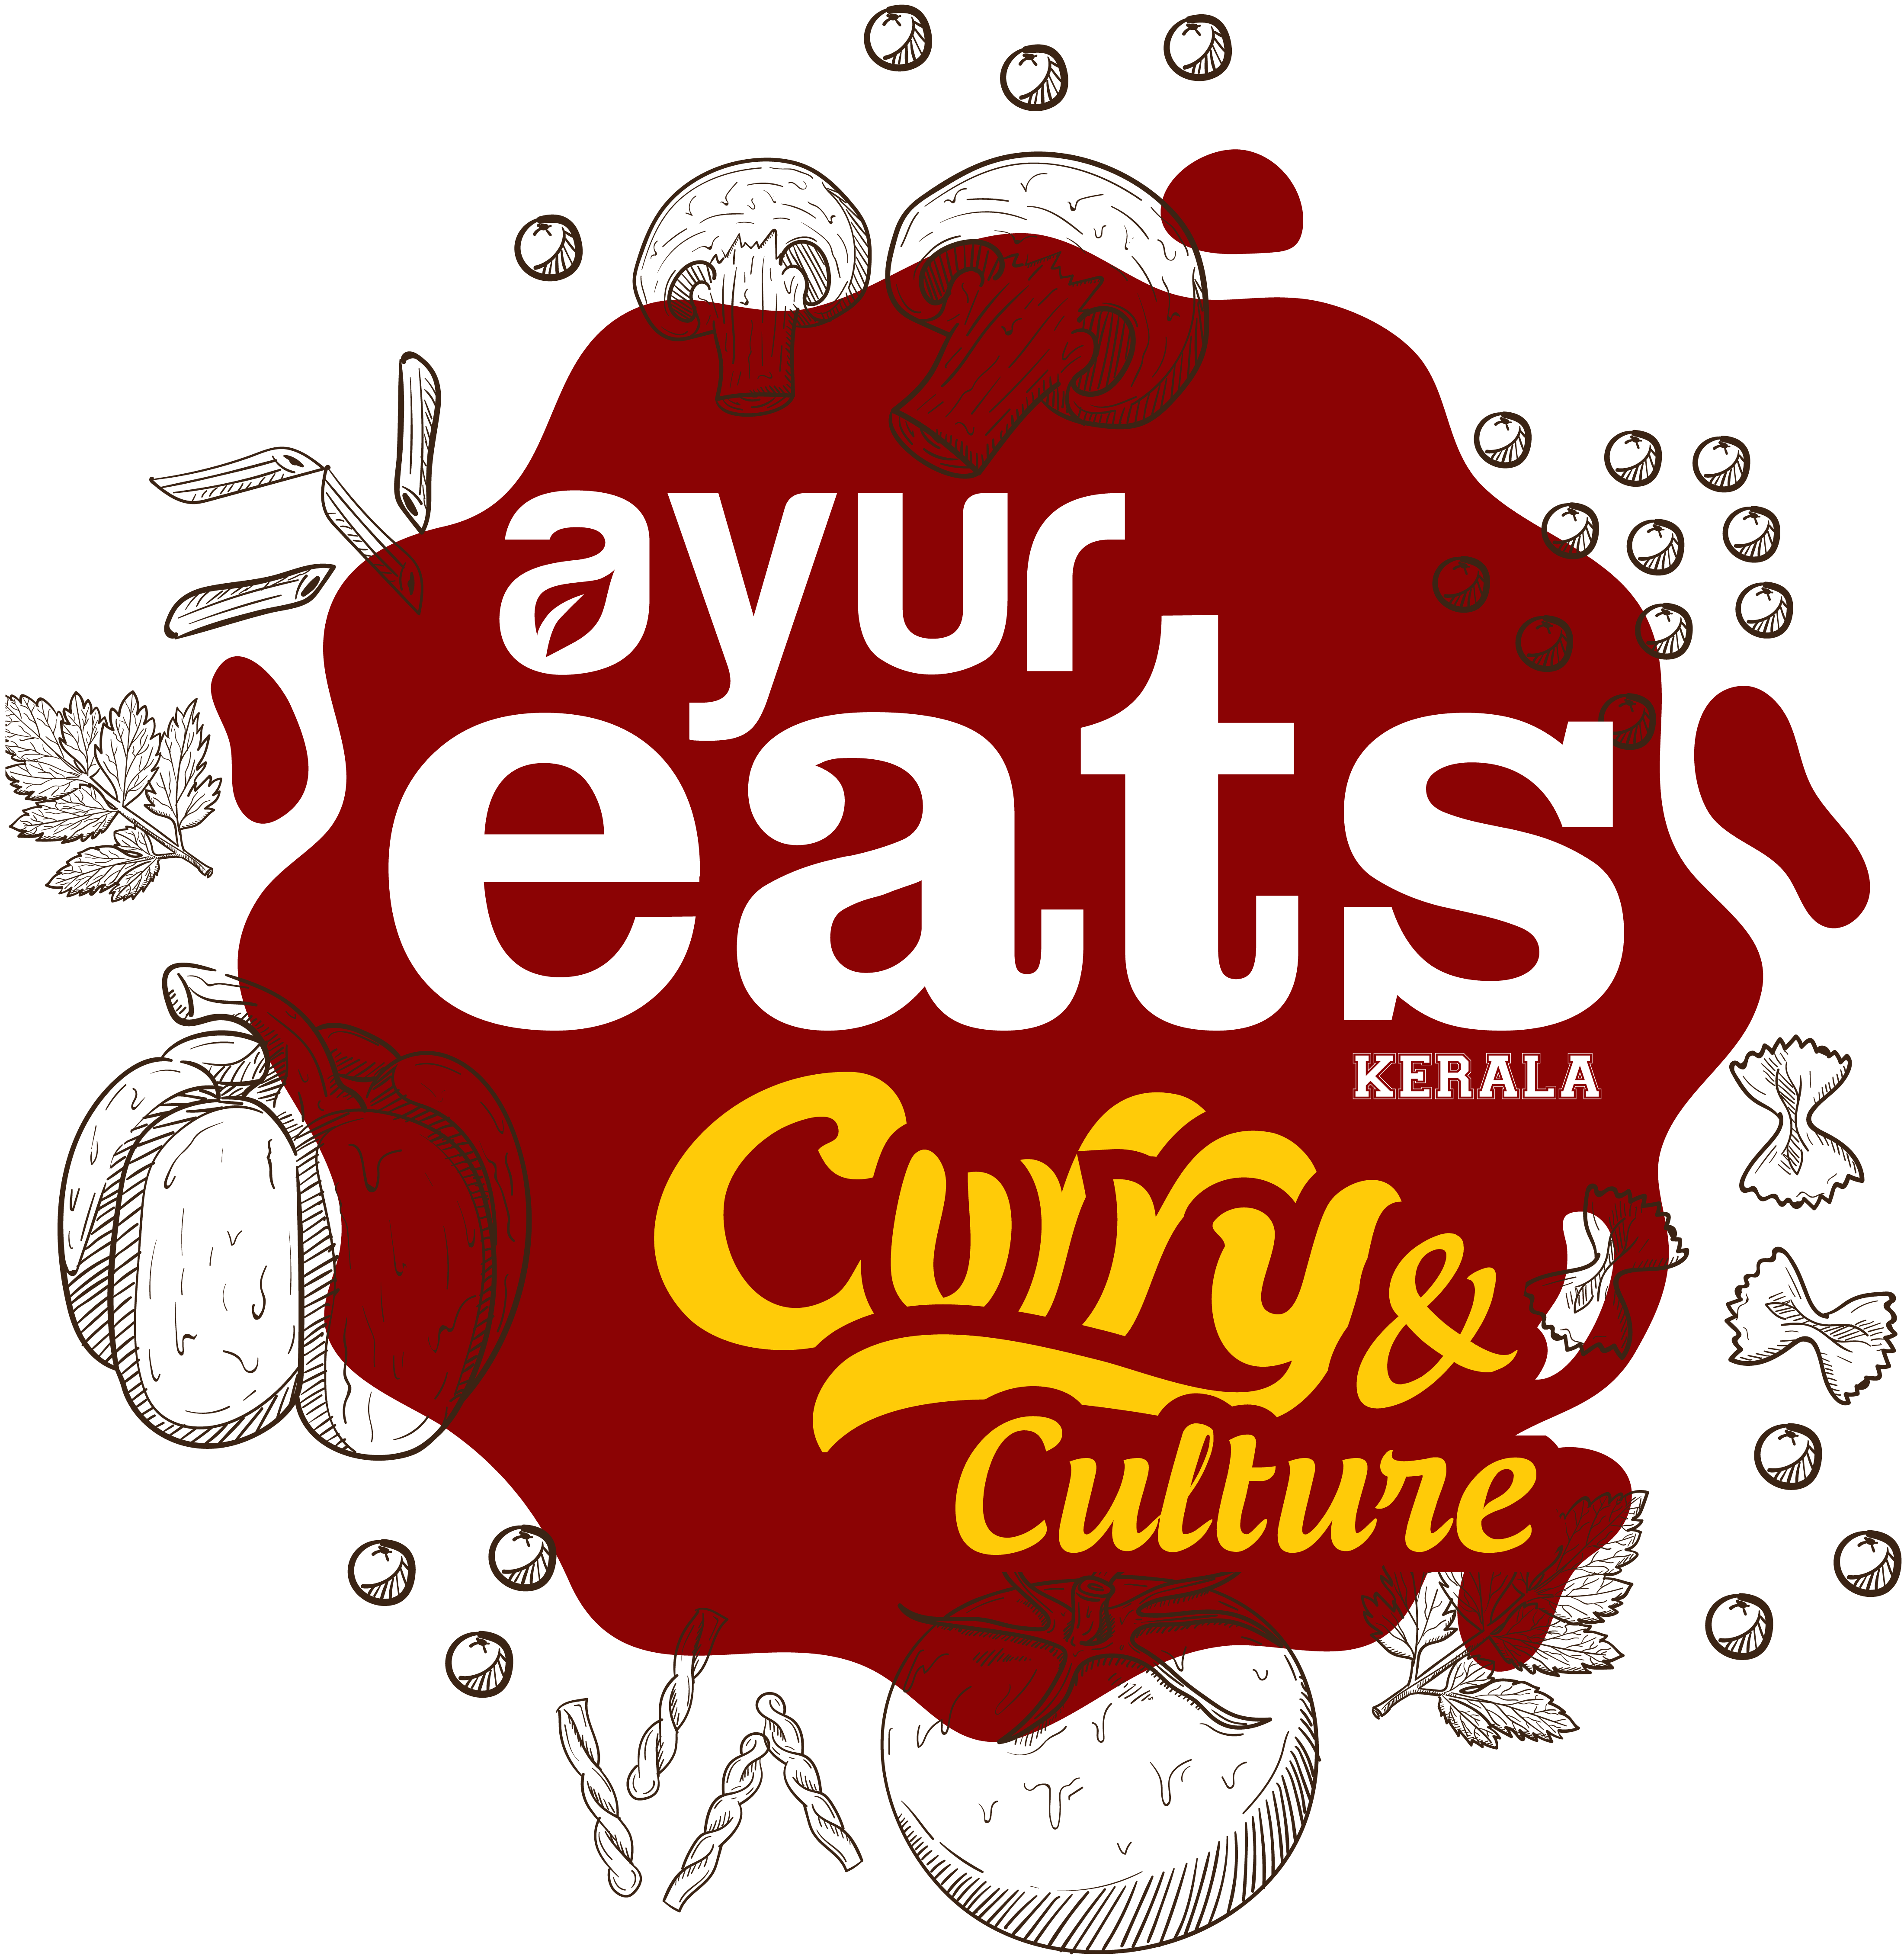 ayur eats logo